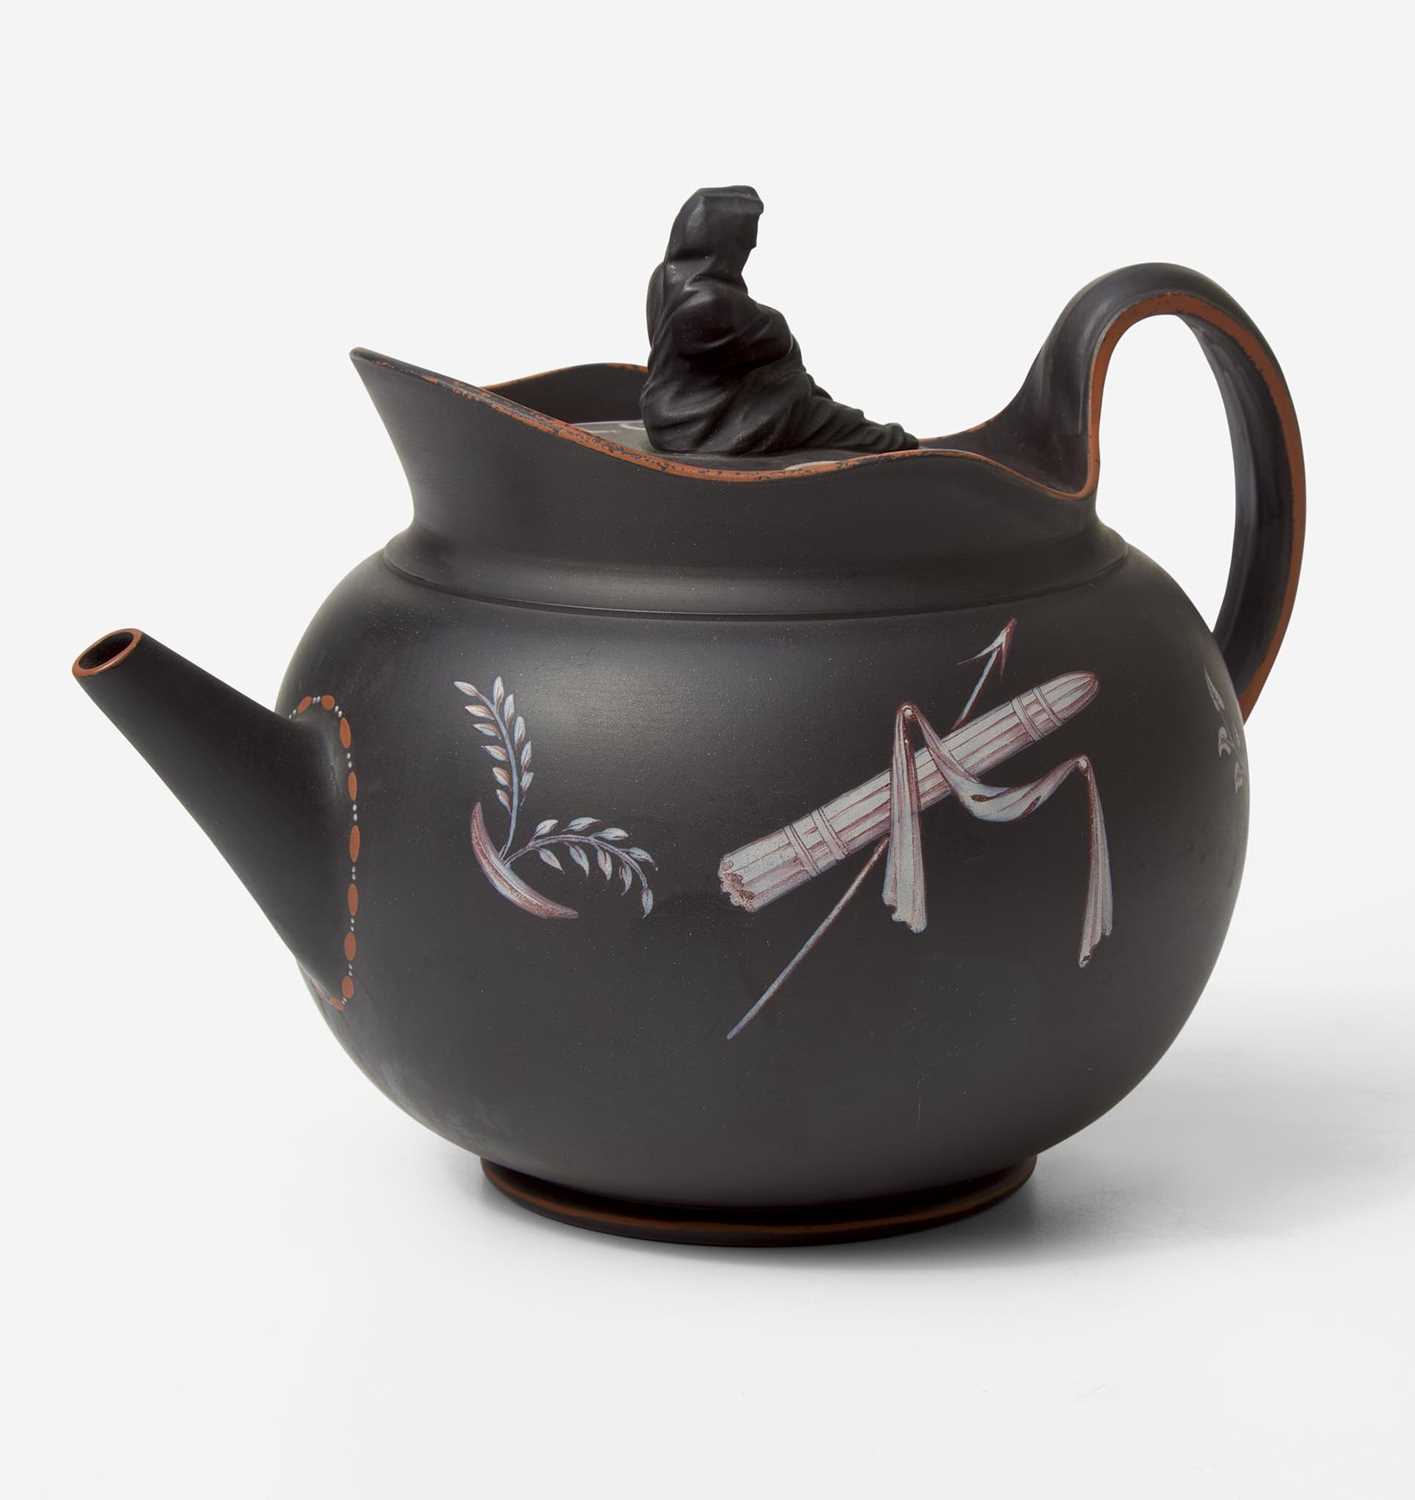 Lot 39 - A Wedgwood & Bentley Encaustic-Decorated Black Basalt Teapot